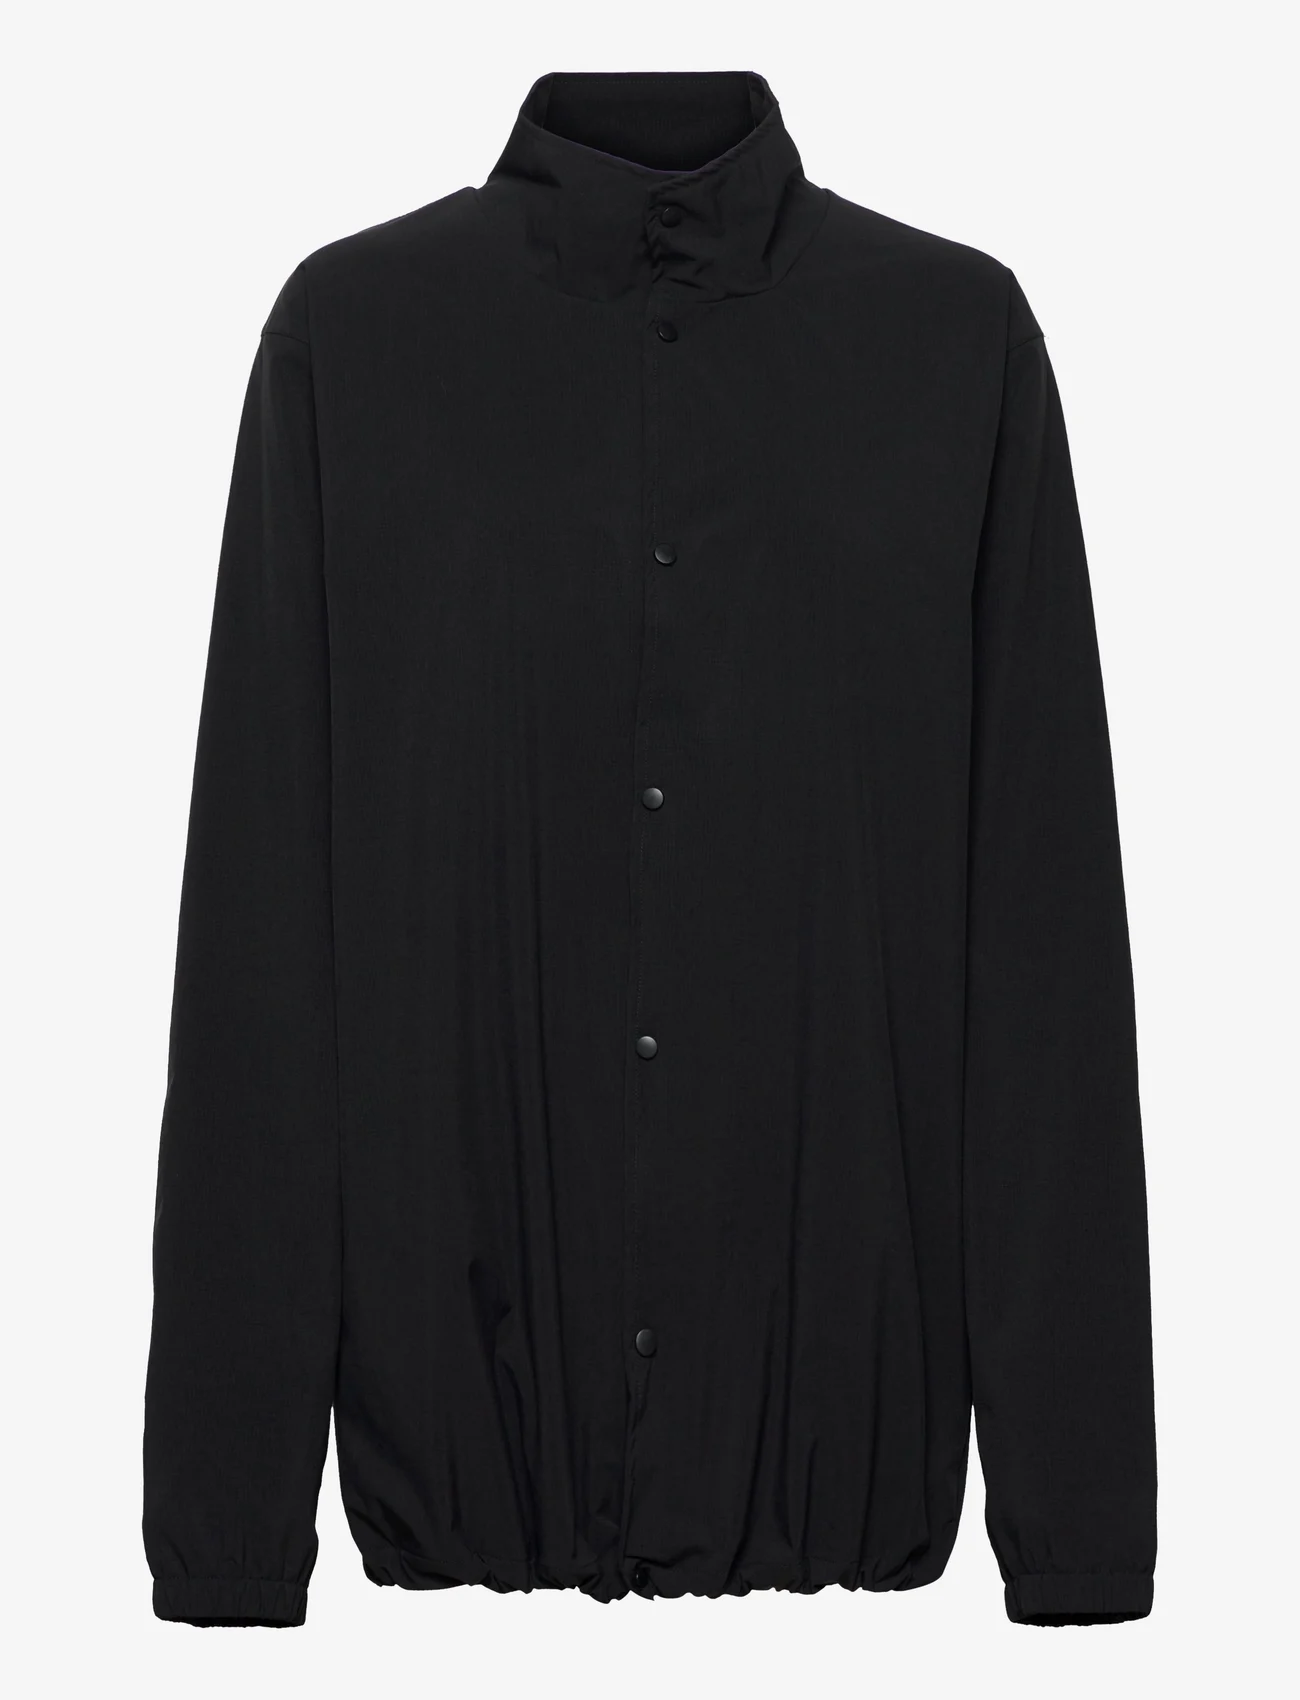 RE DO - Jacket oversize Kendall - sports jackets - black beauty - 0